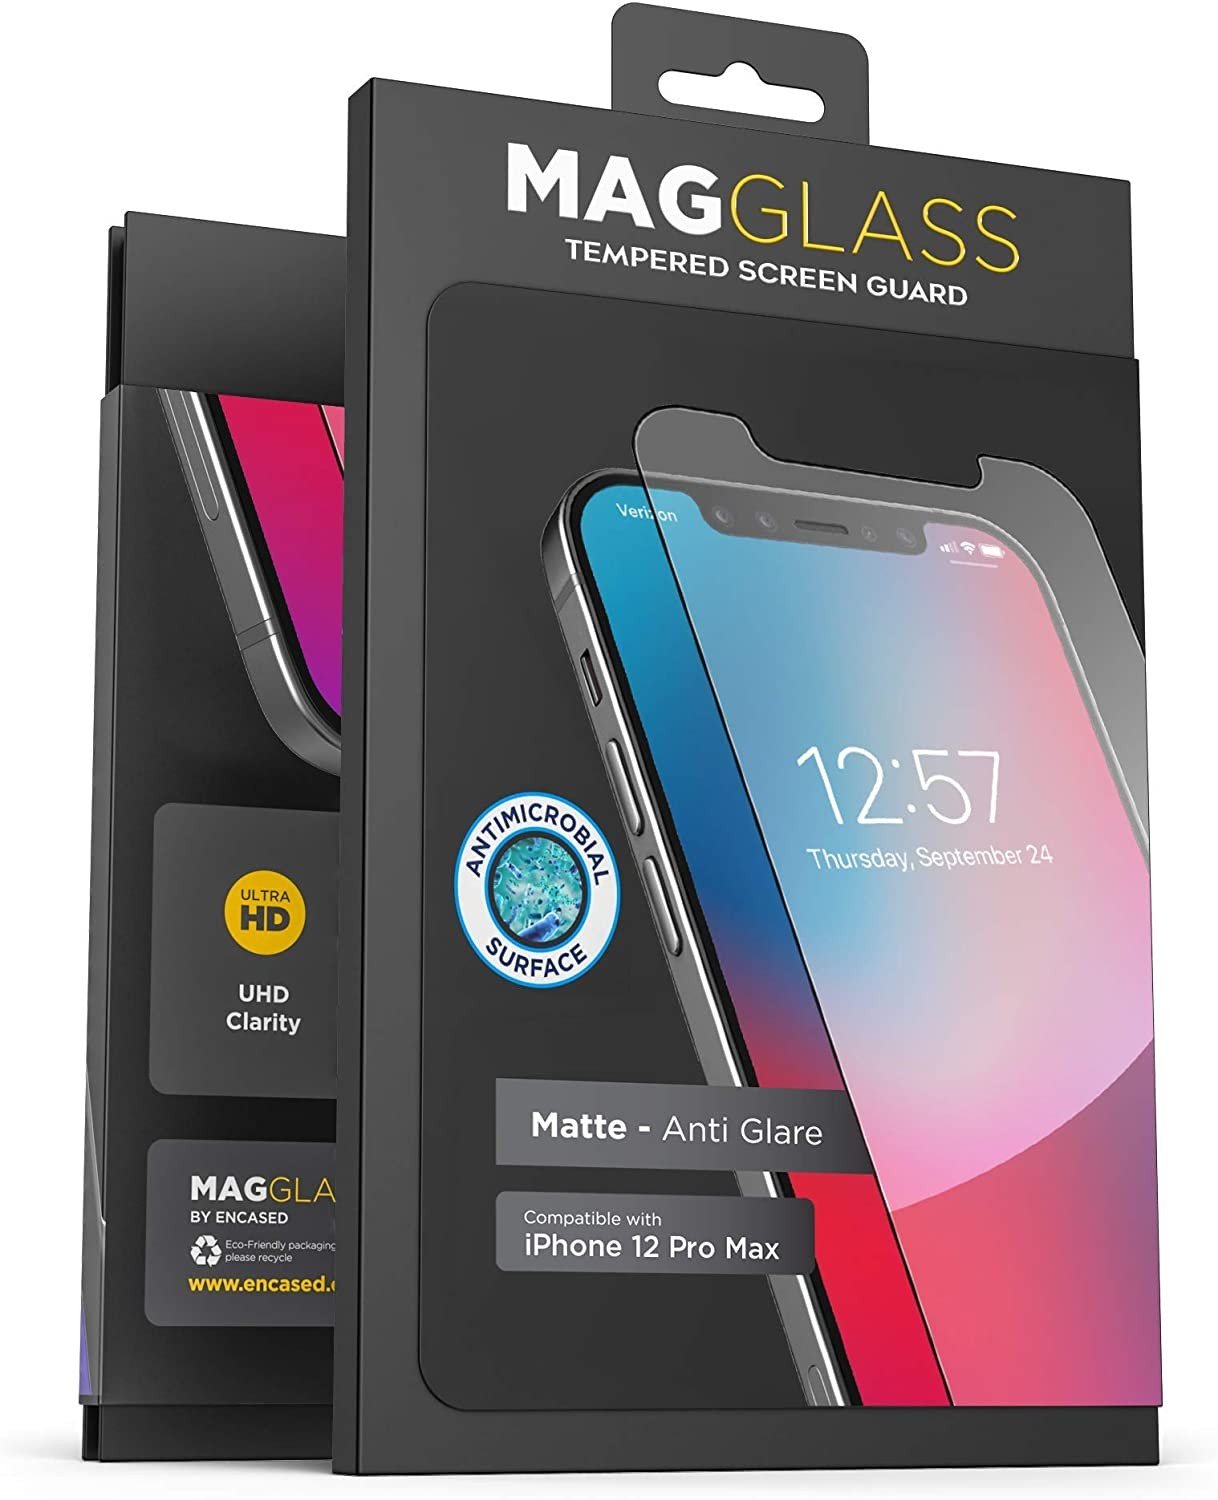 Magglass screen protector